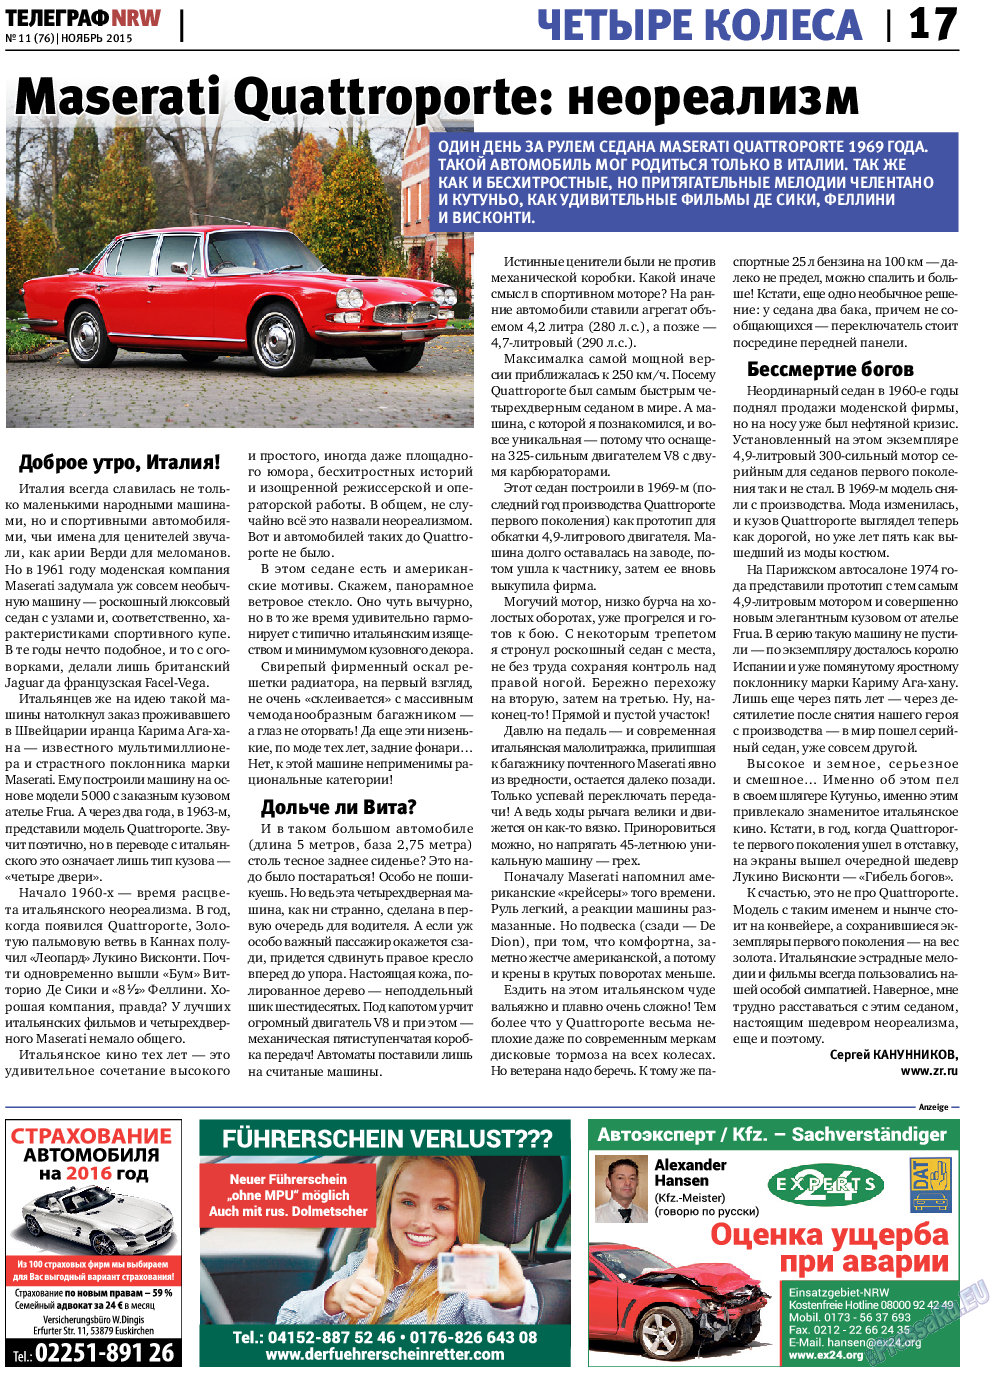 Телеграф NRW, газета. 2015 №11 стр.17